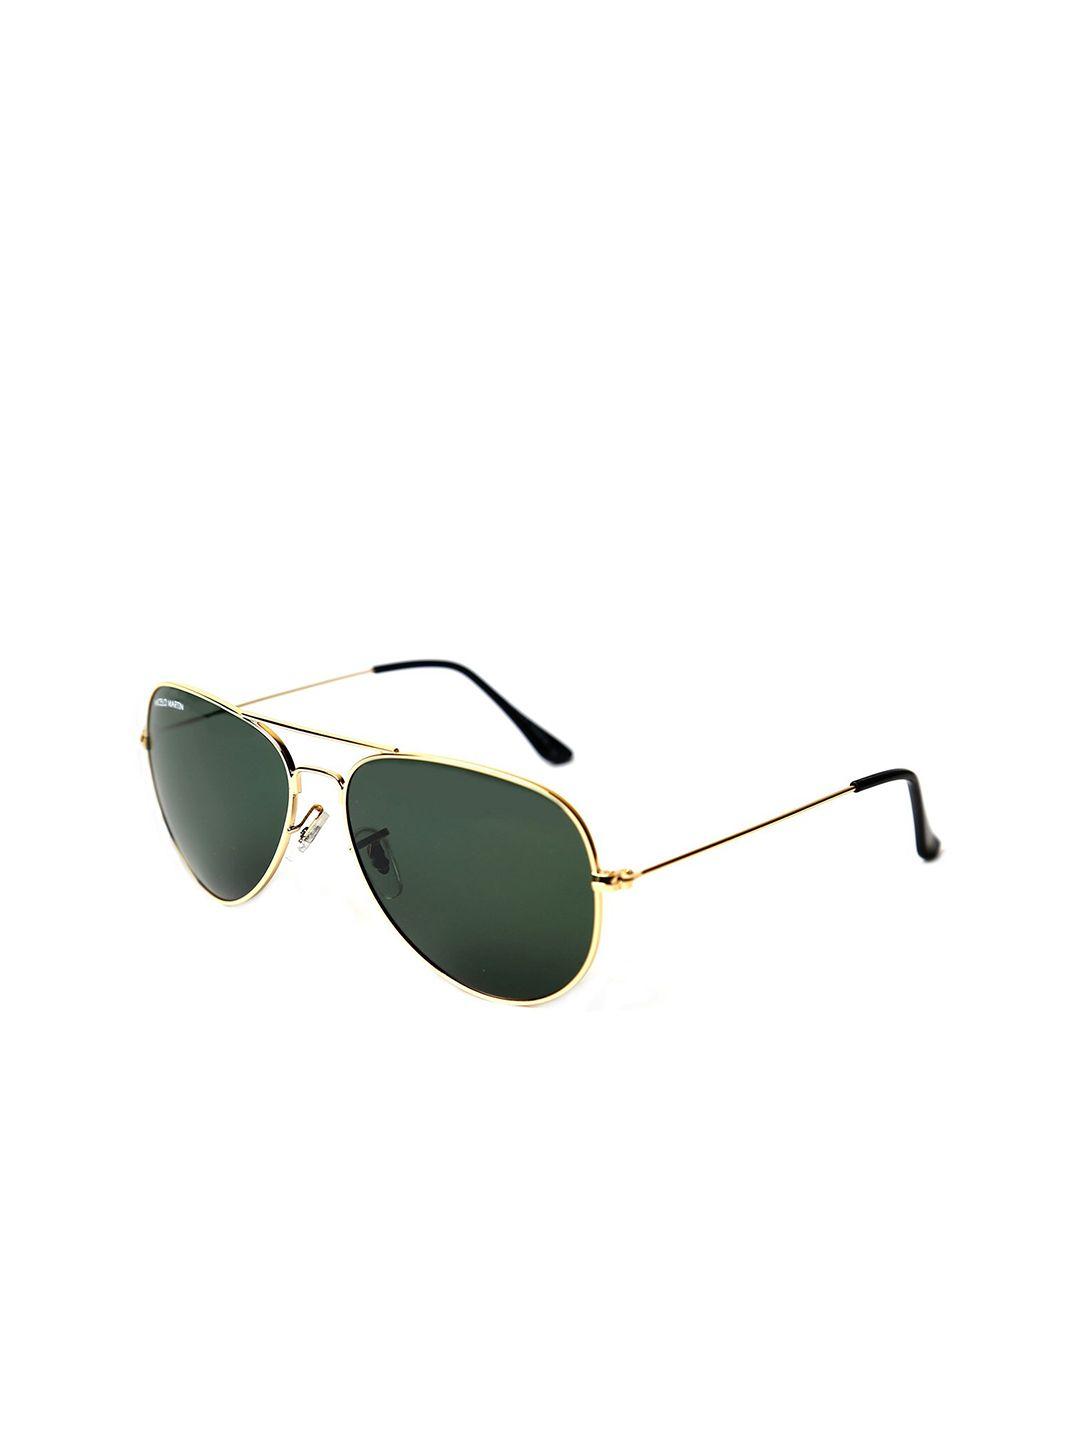 micelo martin unisex green uv protected oval sunglasses mm1001 c1